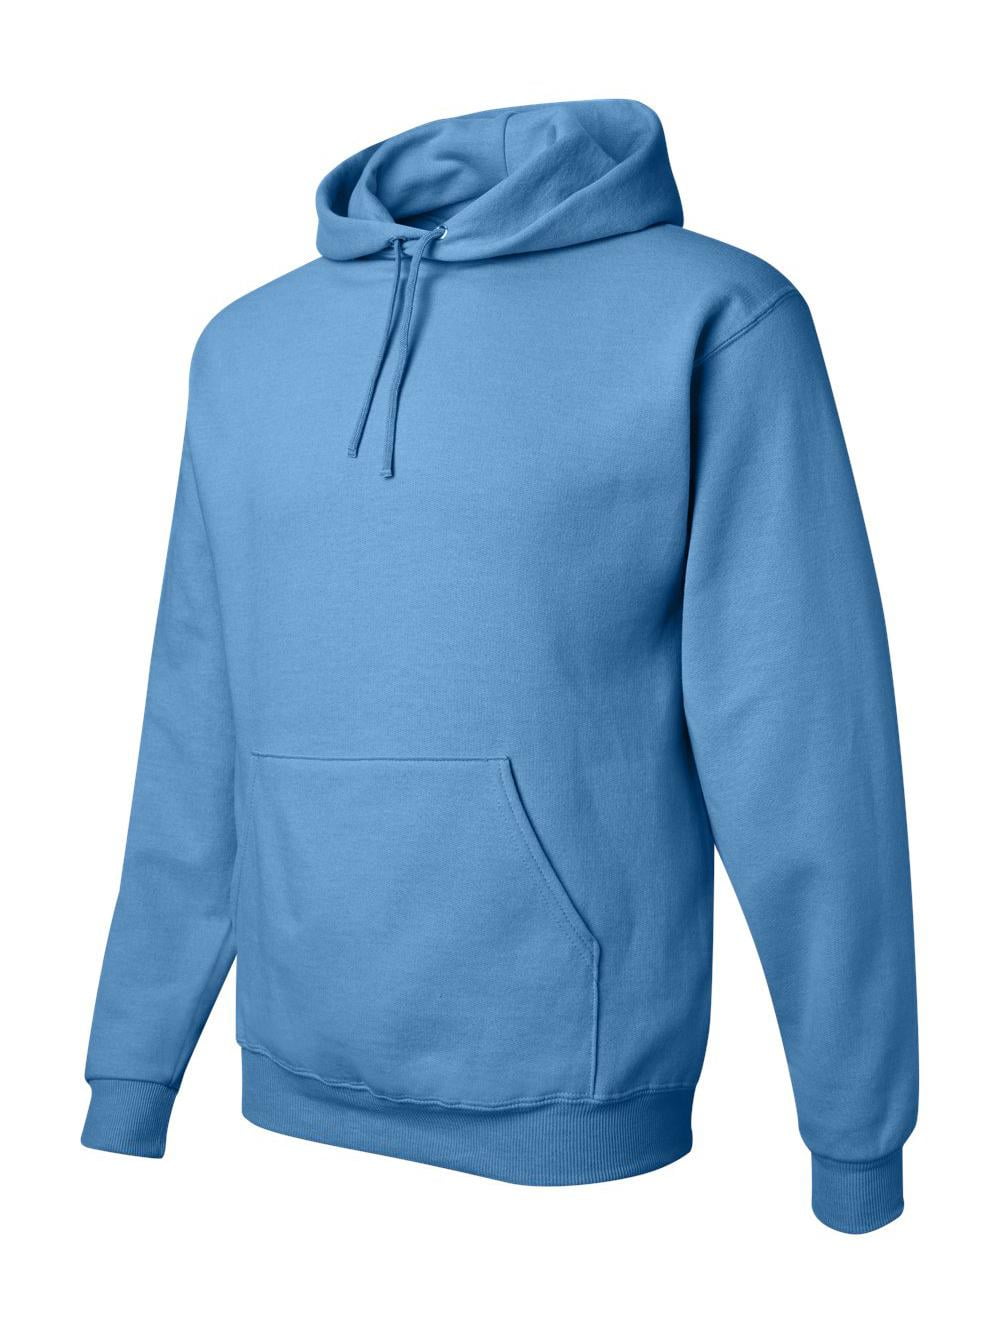 JERZEES - NuBlend Hooded Sweatshirt - 996MR - Walmart.com